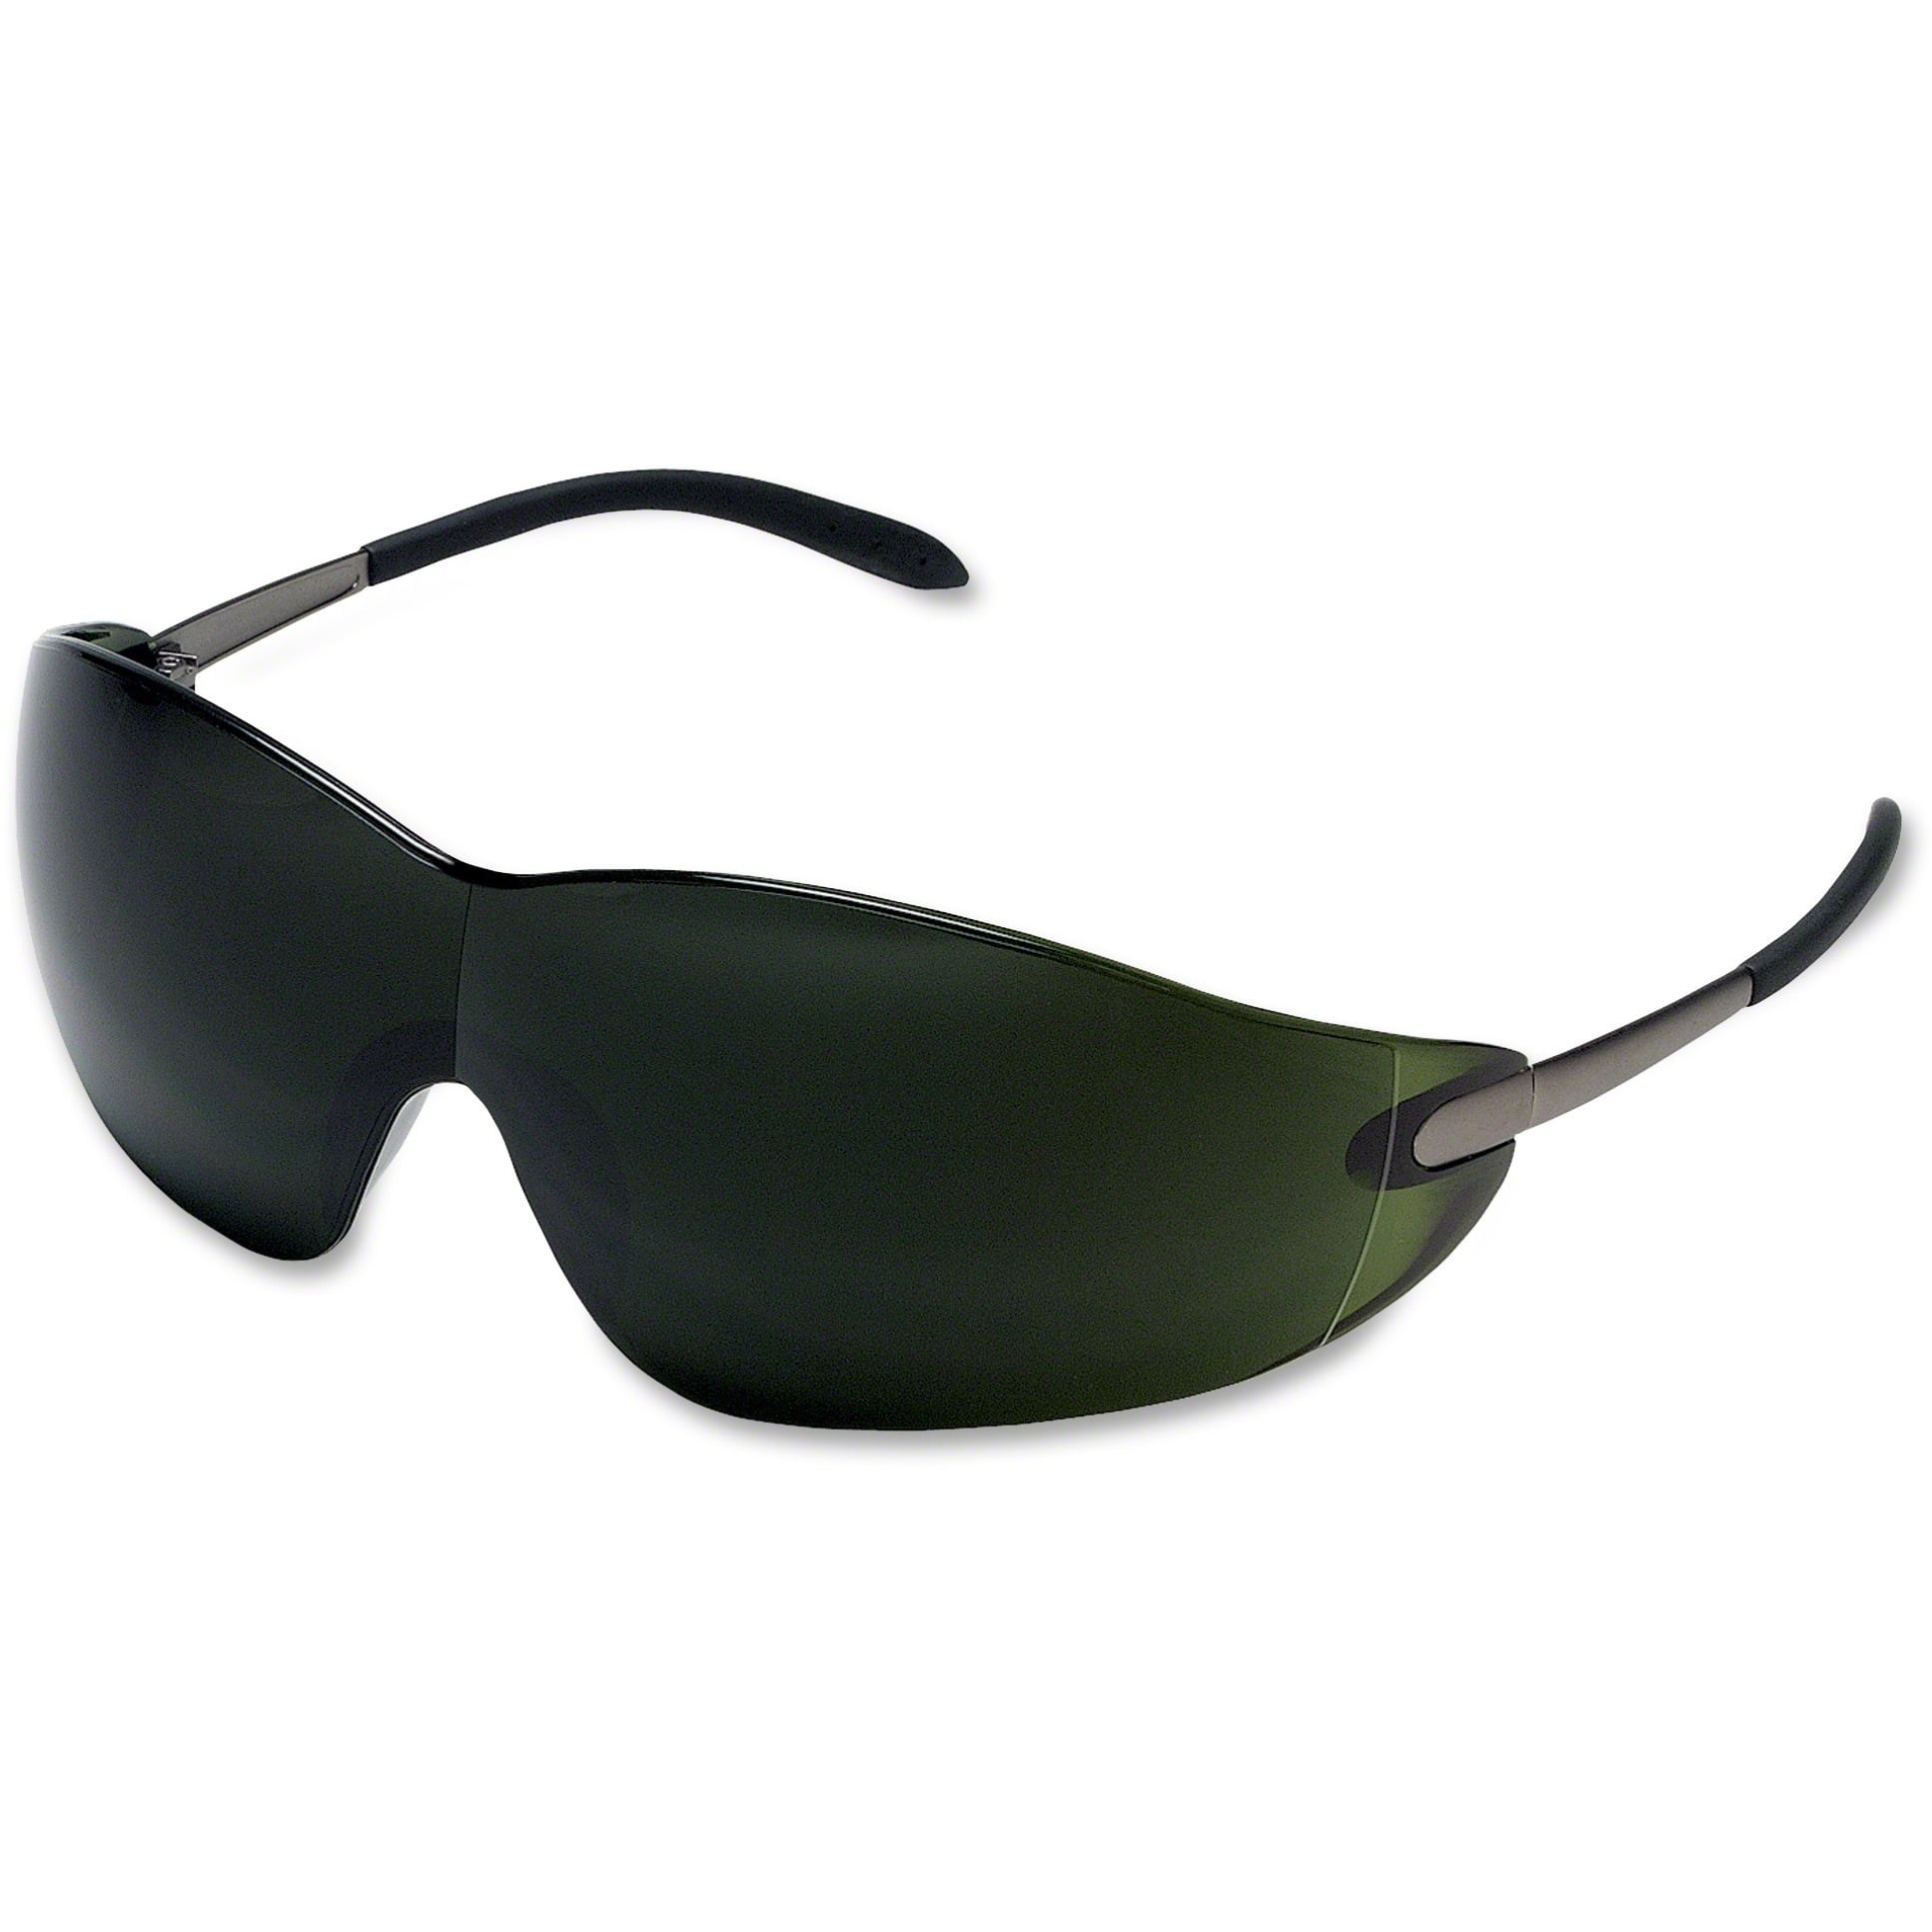 3M Moon Dawg Safety Glasses Eye Protection Anti-Fog Black 11216-00000-20 3-Pair 